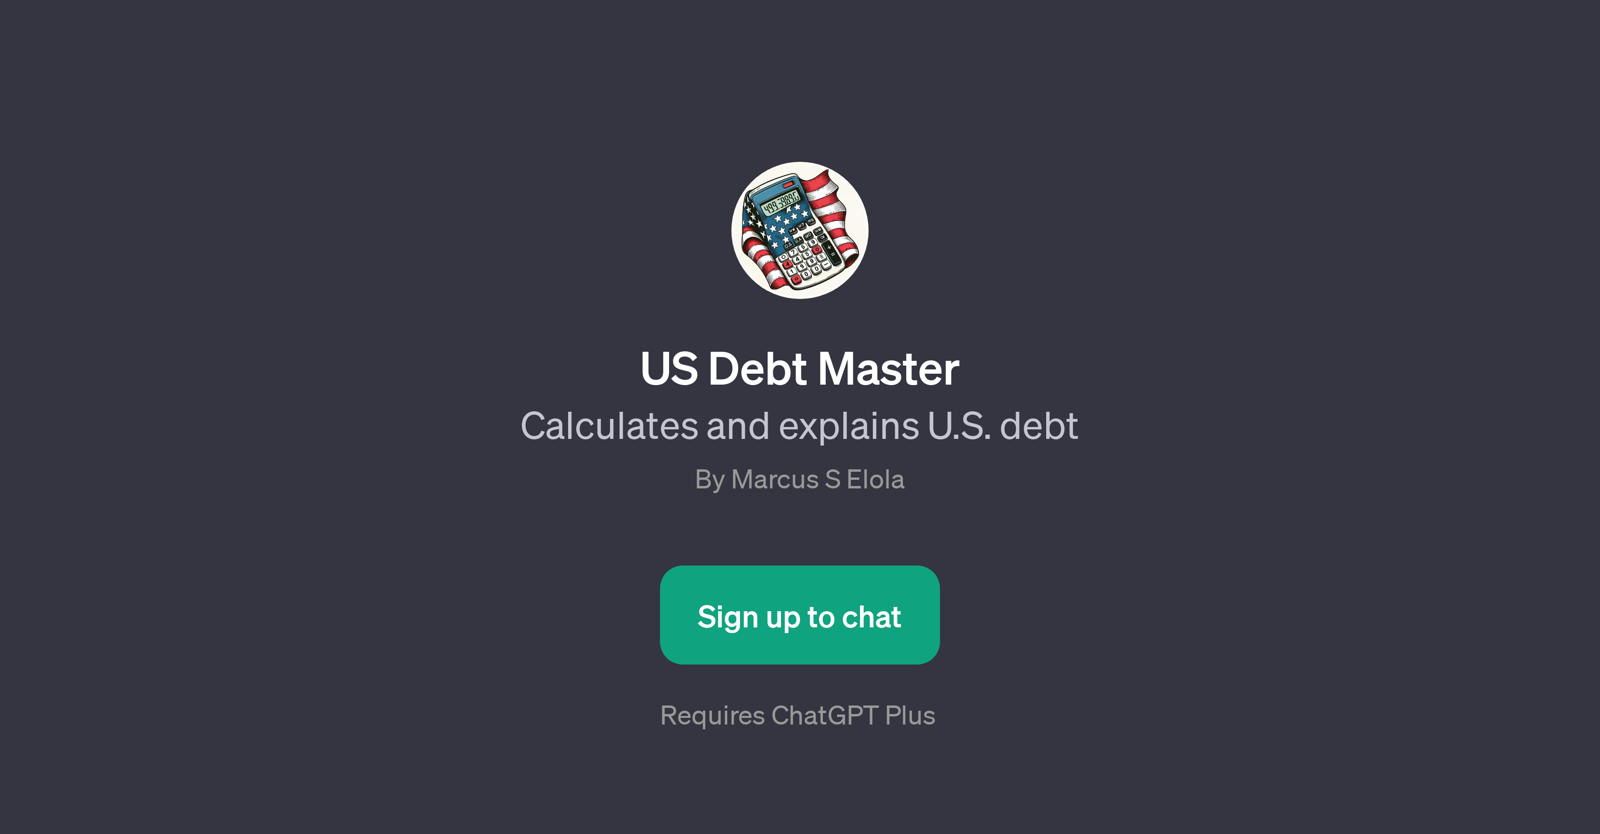 US Debt Master website